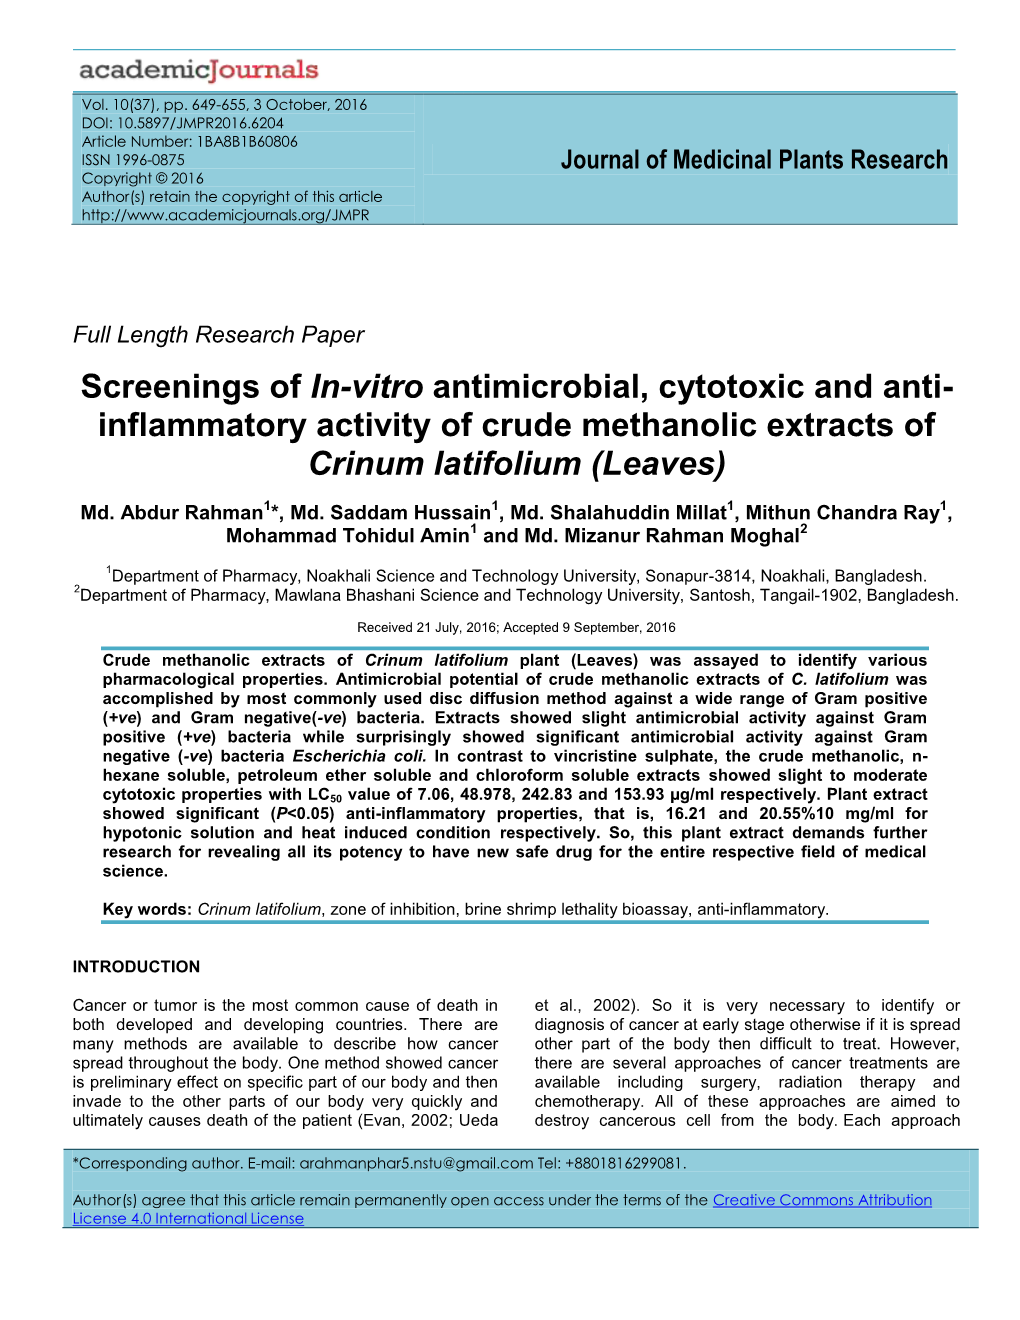 Inflammatory Activity of Crude Methanolic Extracts of Crinum Latifolium (Leaves)